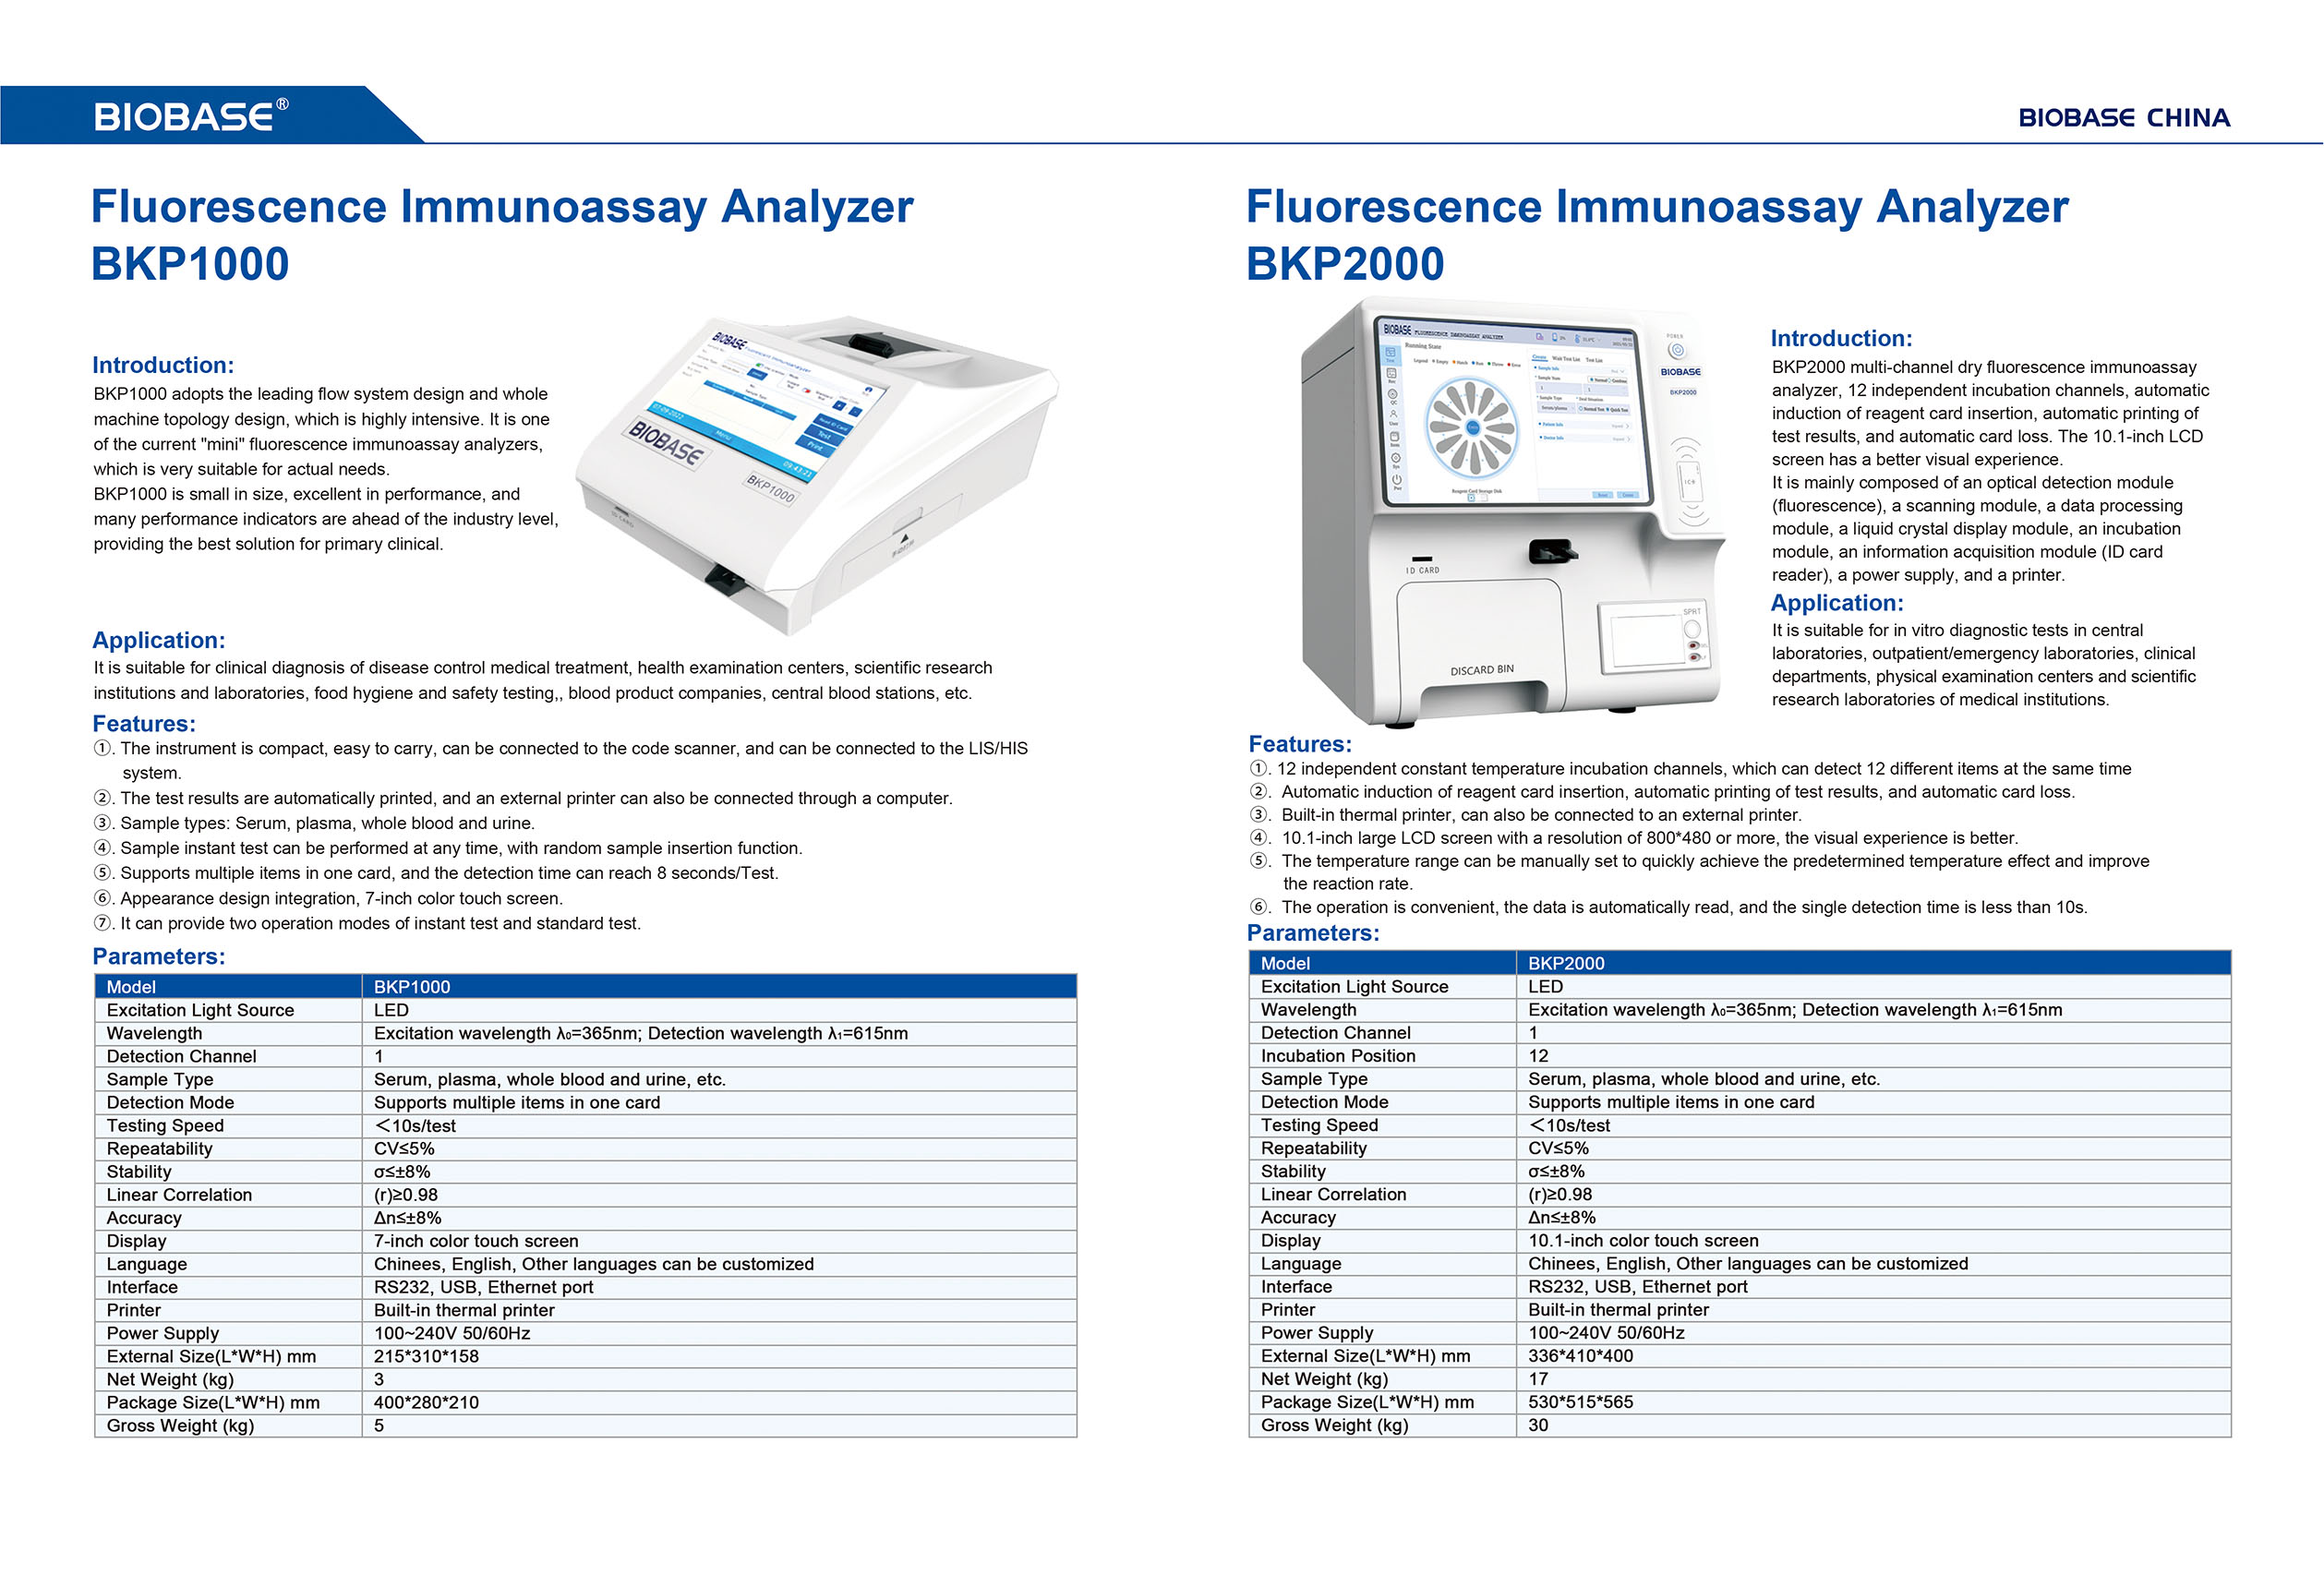 Fluorescence Immunoassay Analyzer BKP1000&BKP2000